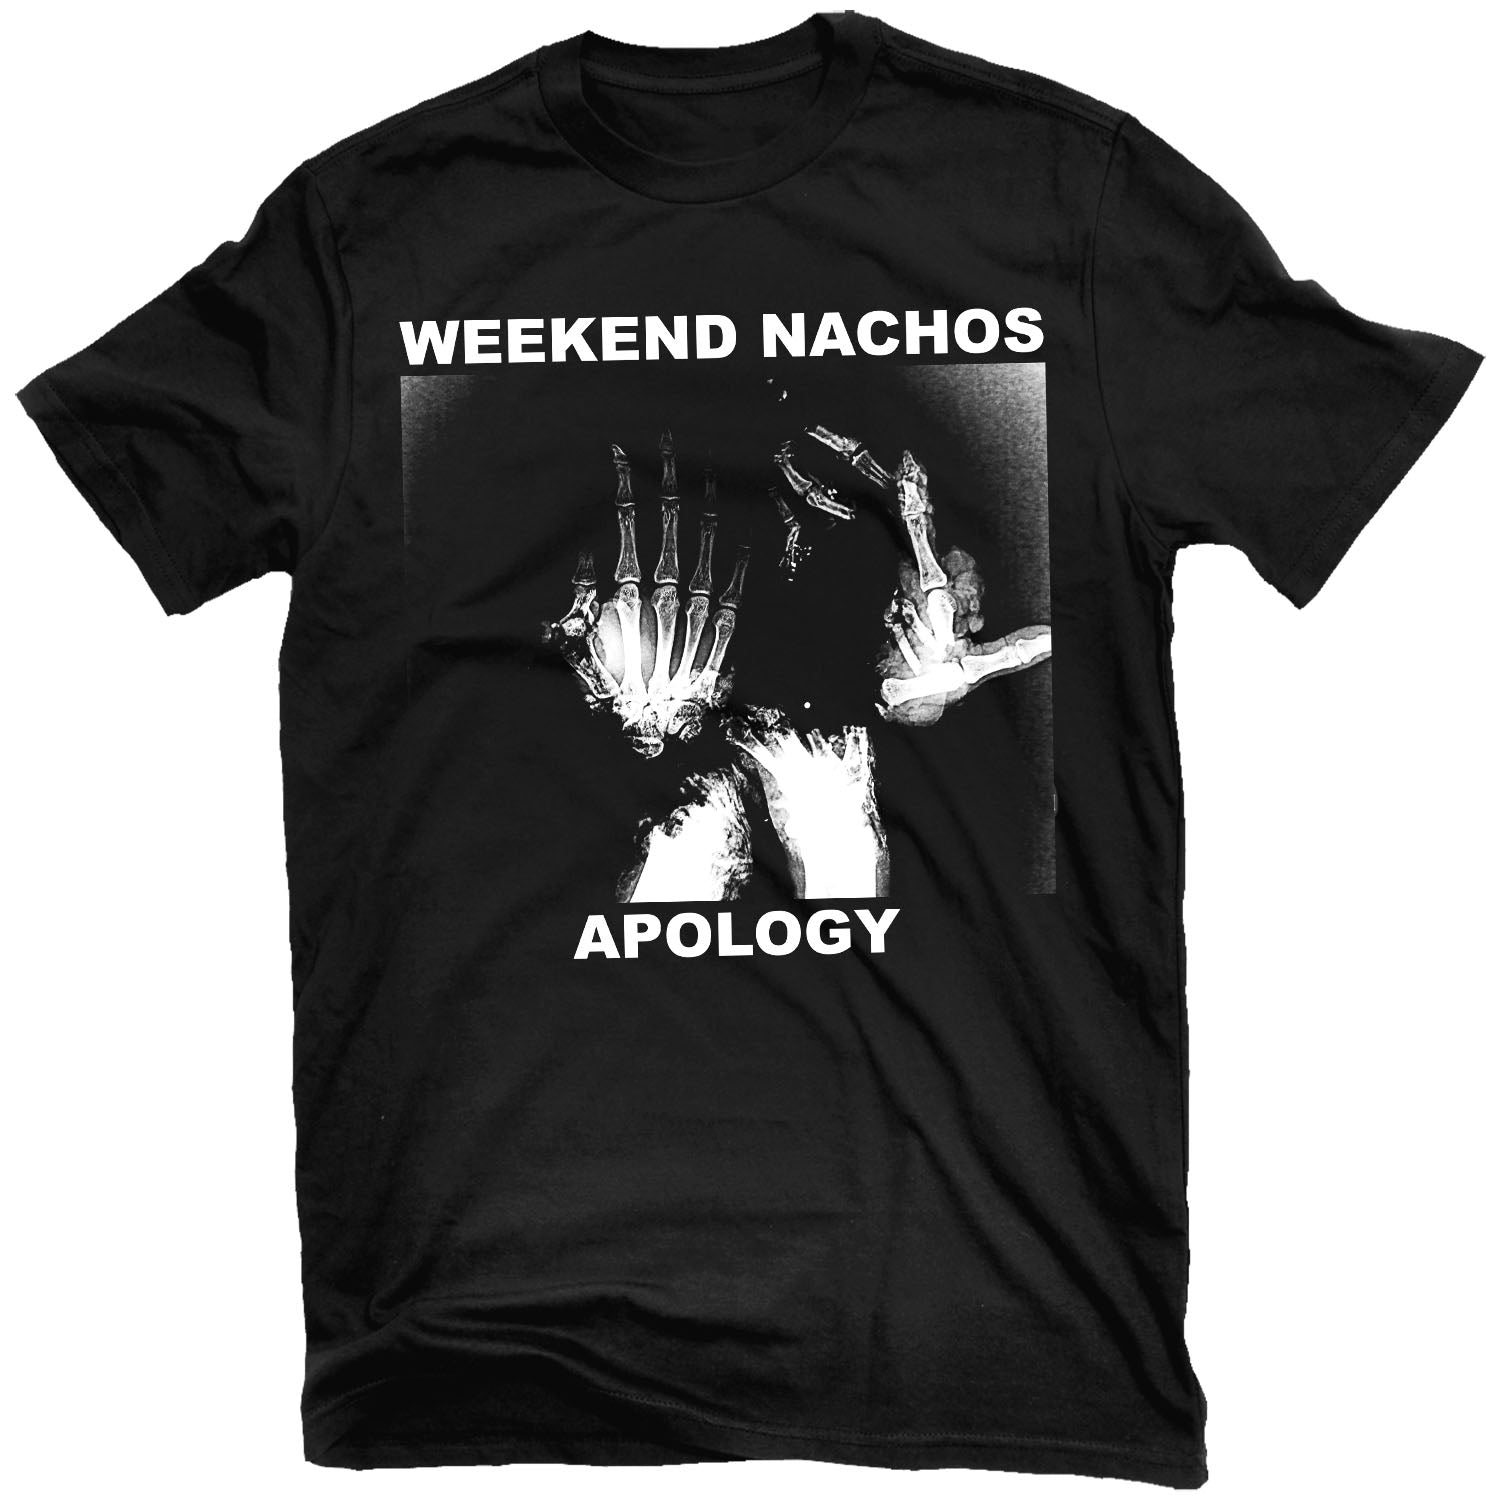 Weekend Nachos "Apology" T-Shirt